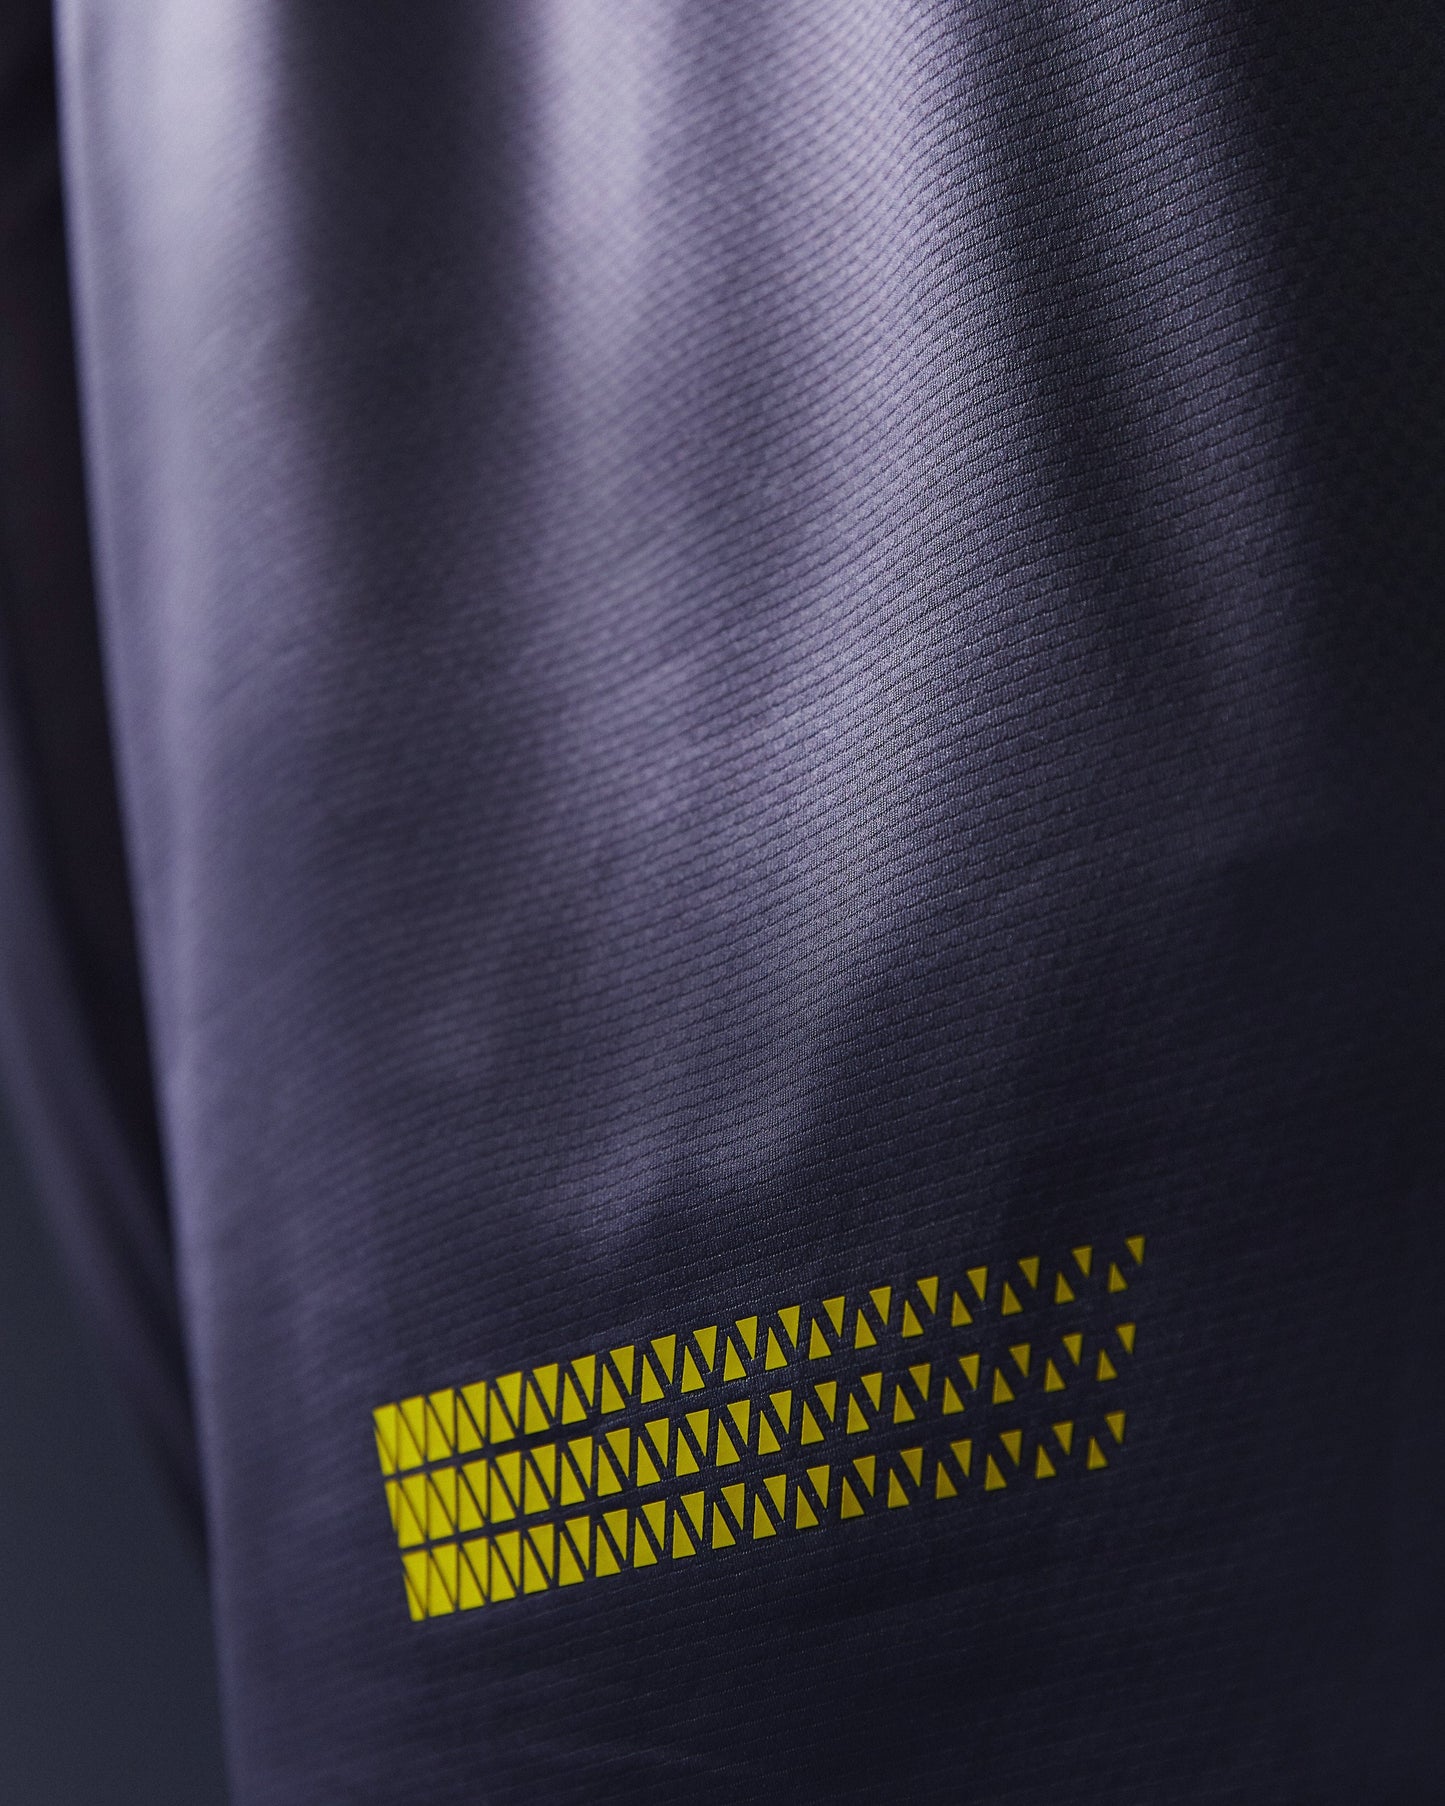 SUDU SRT LS 01 Run Long Sleeve Shirt - Iron Gate / Blazing Yellow Long Sleeve Shirt